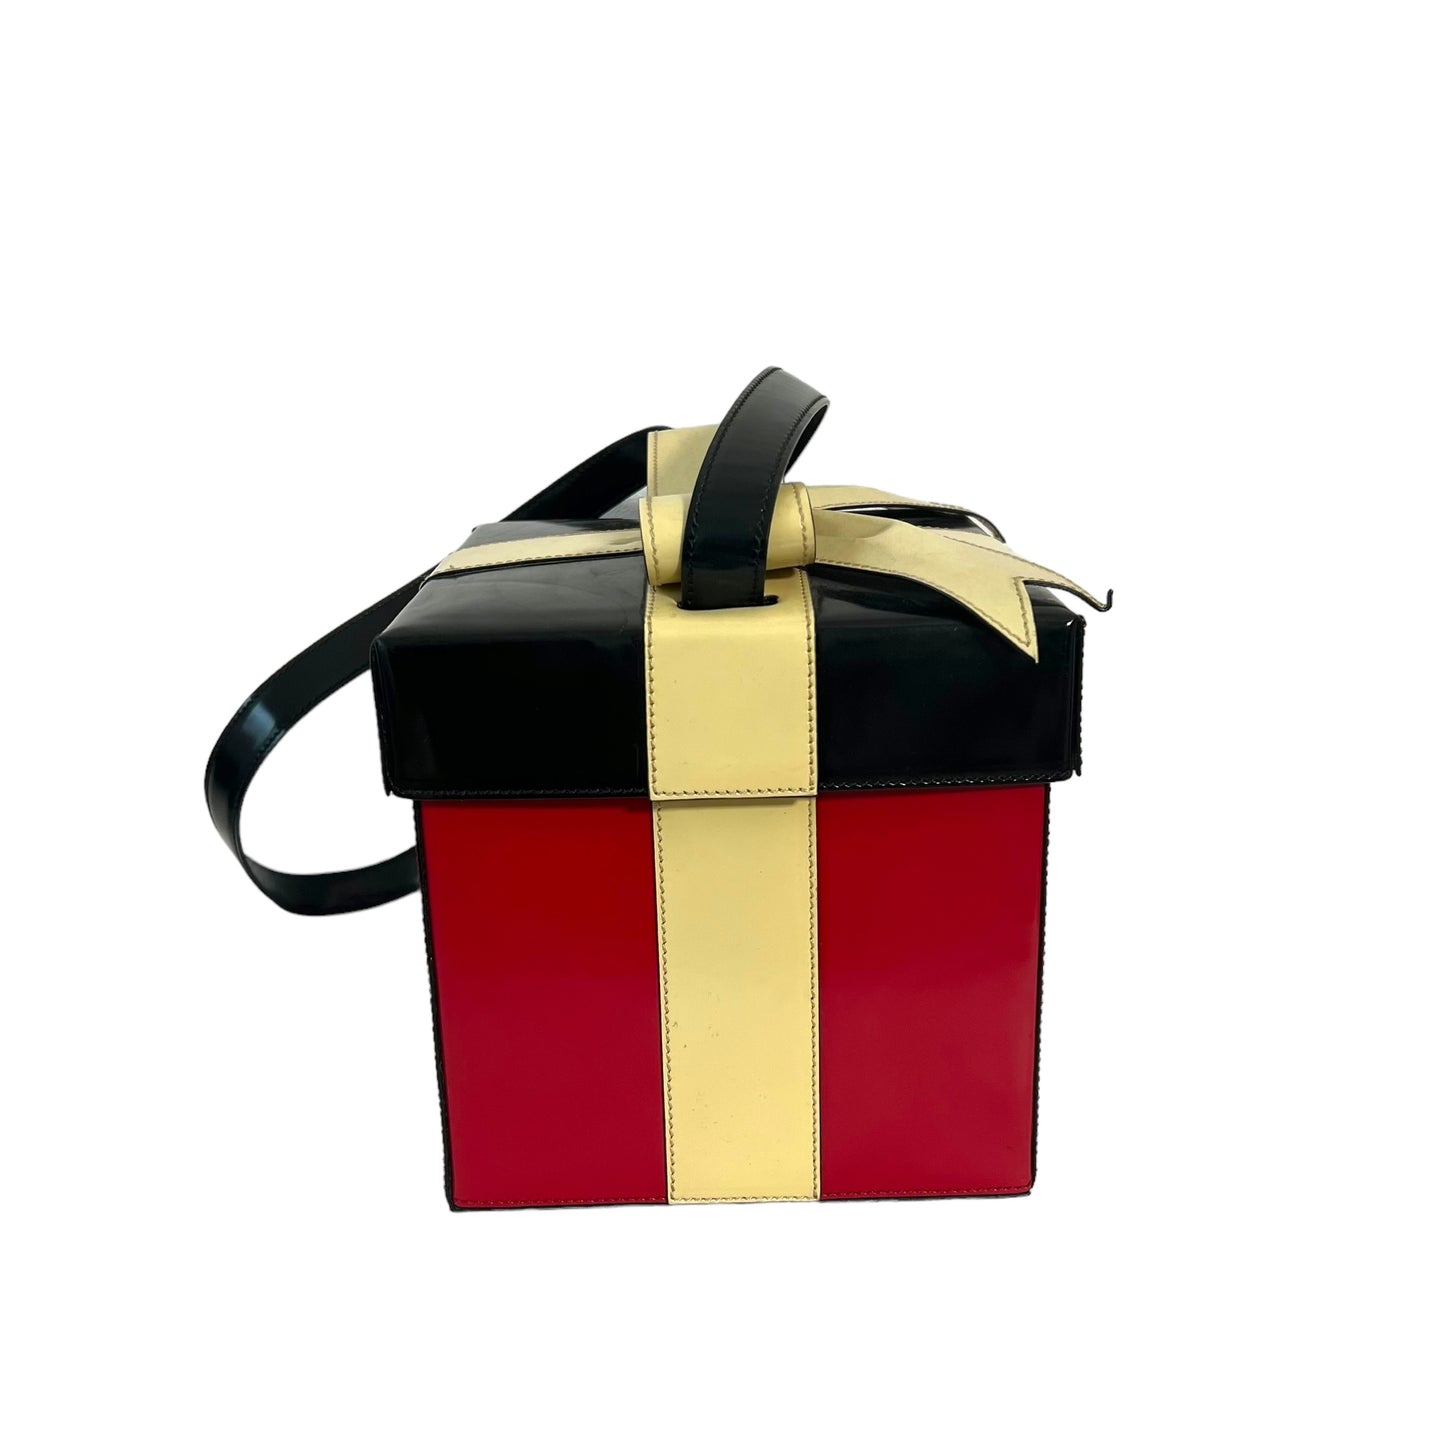 Moschino gift box bag